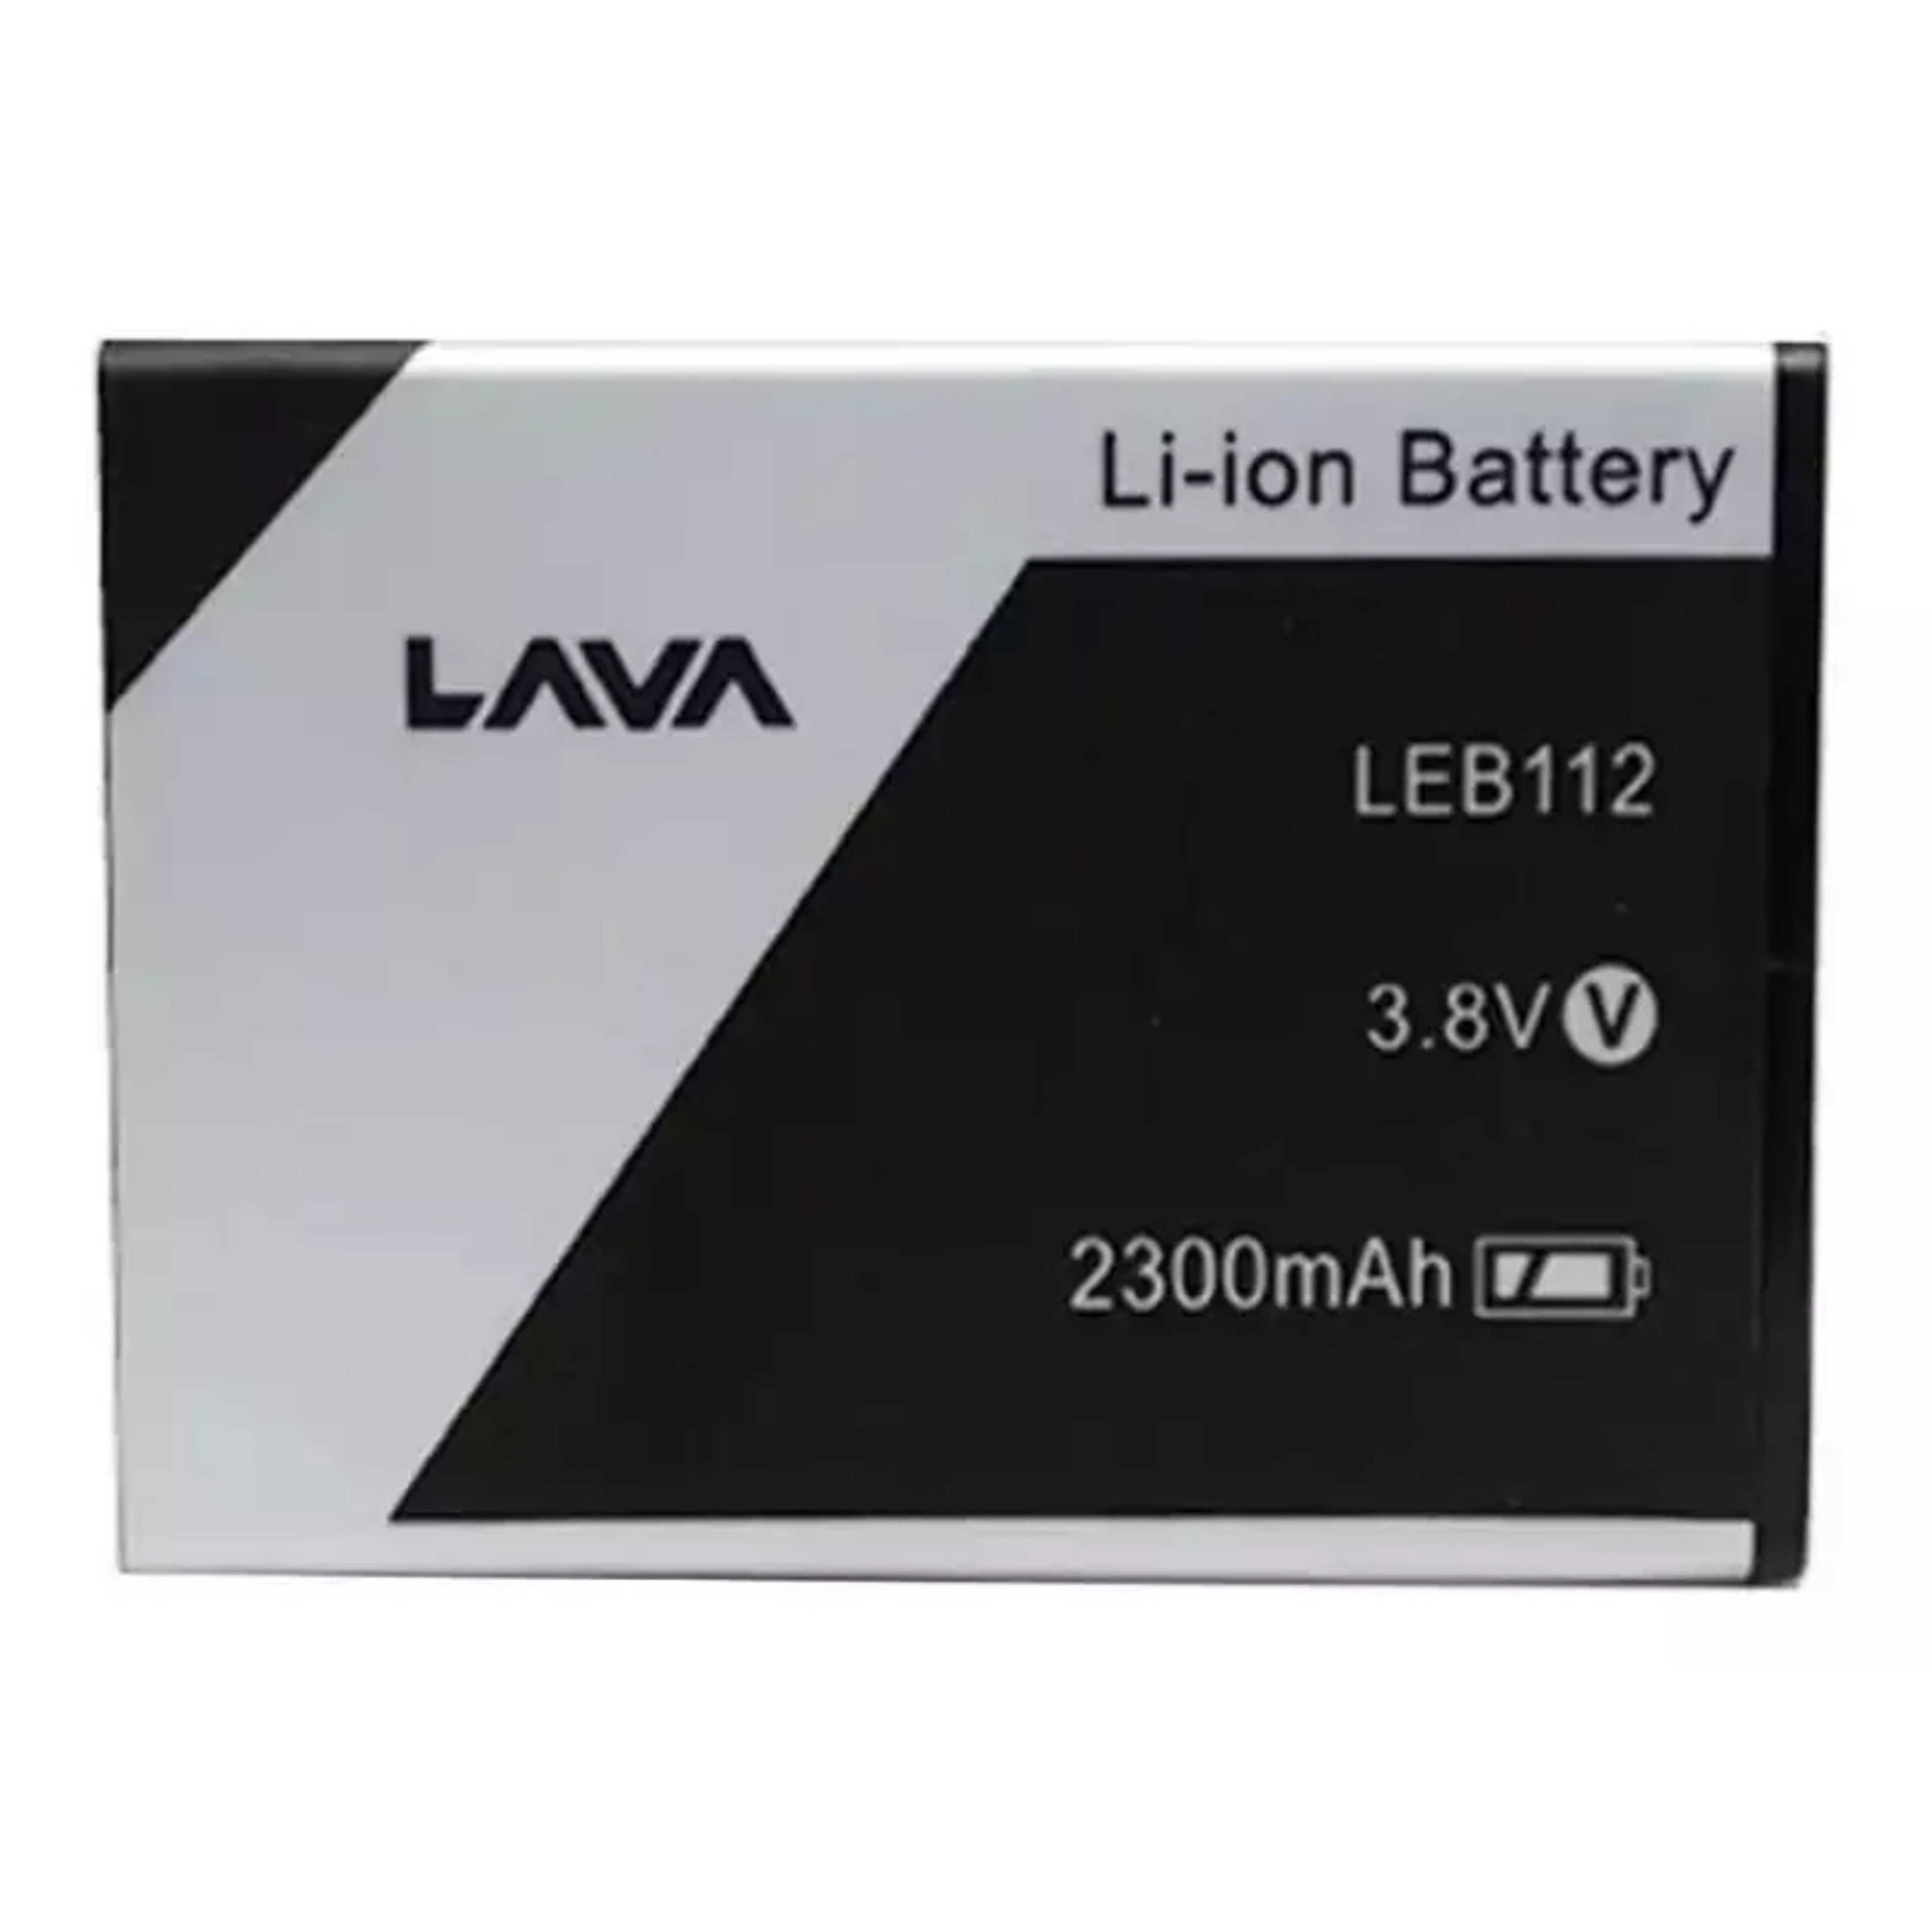 LEB112 Battery for LAVA Iris 702 2300mAh 3.8v